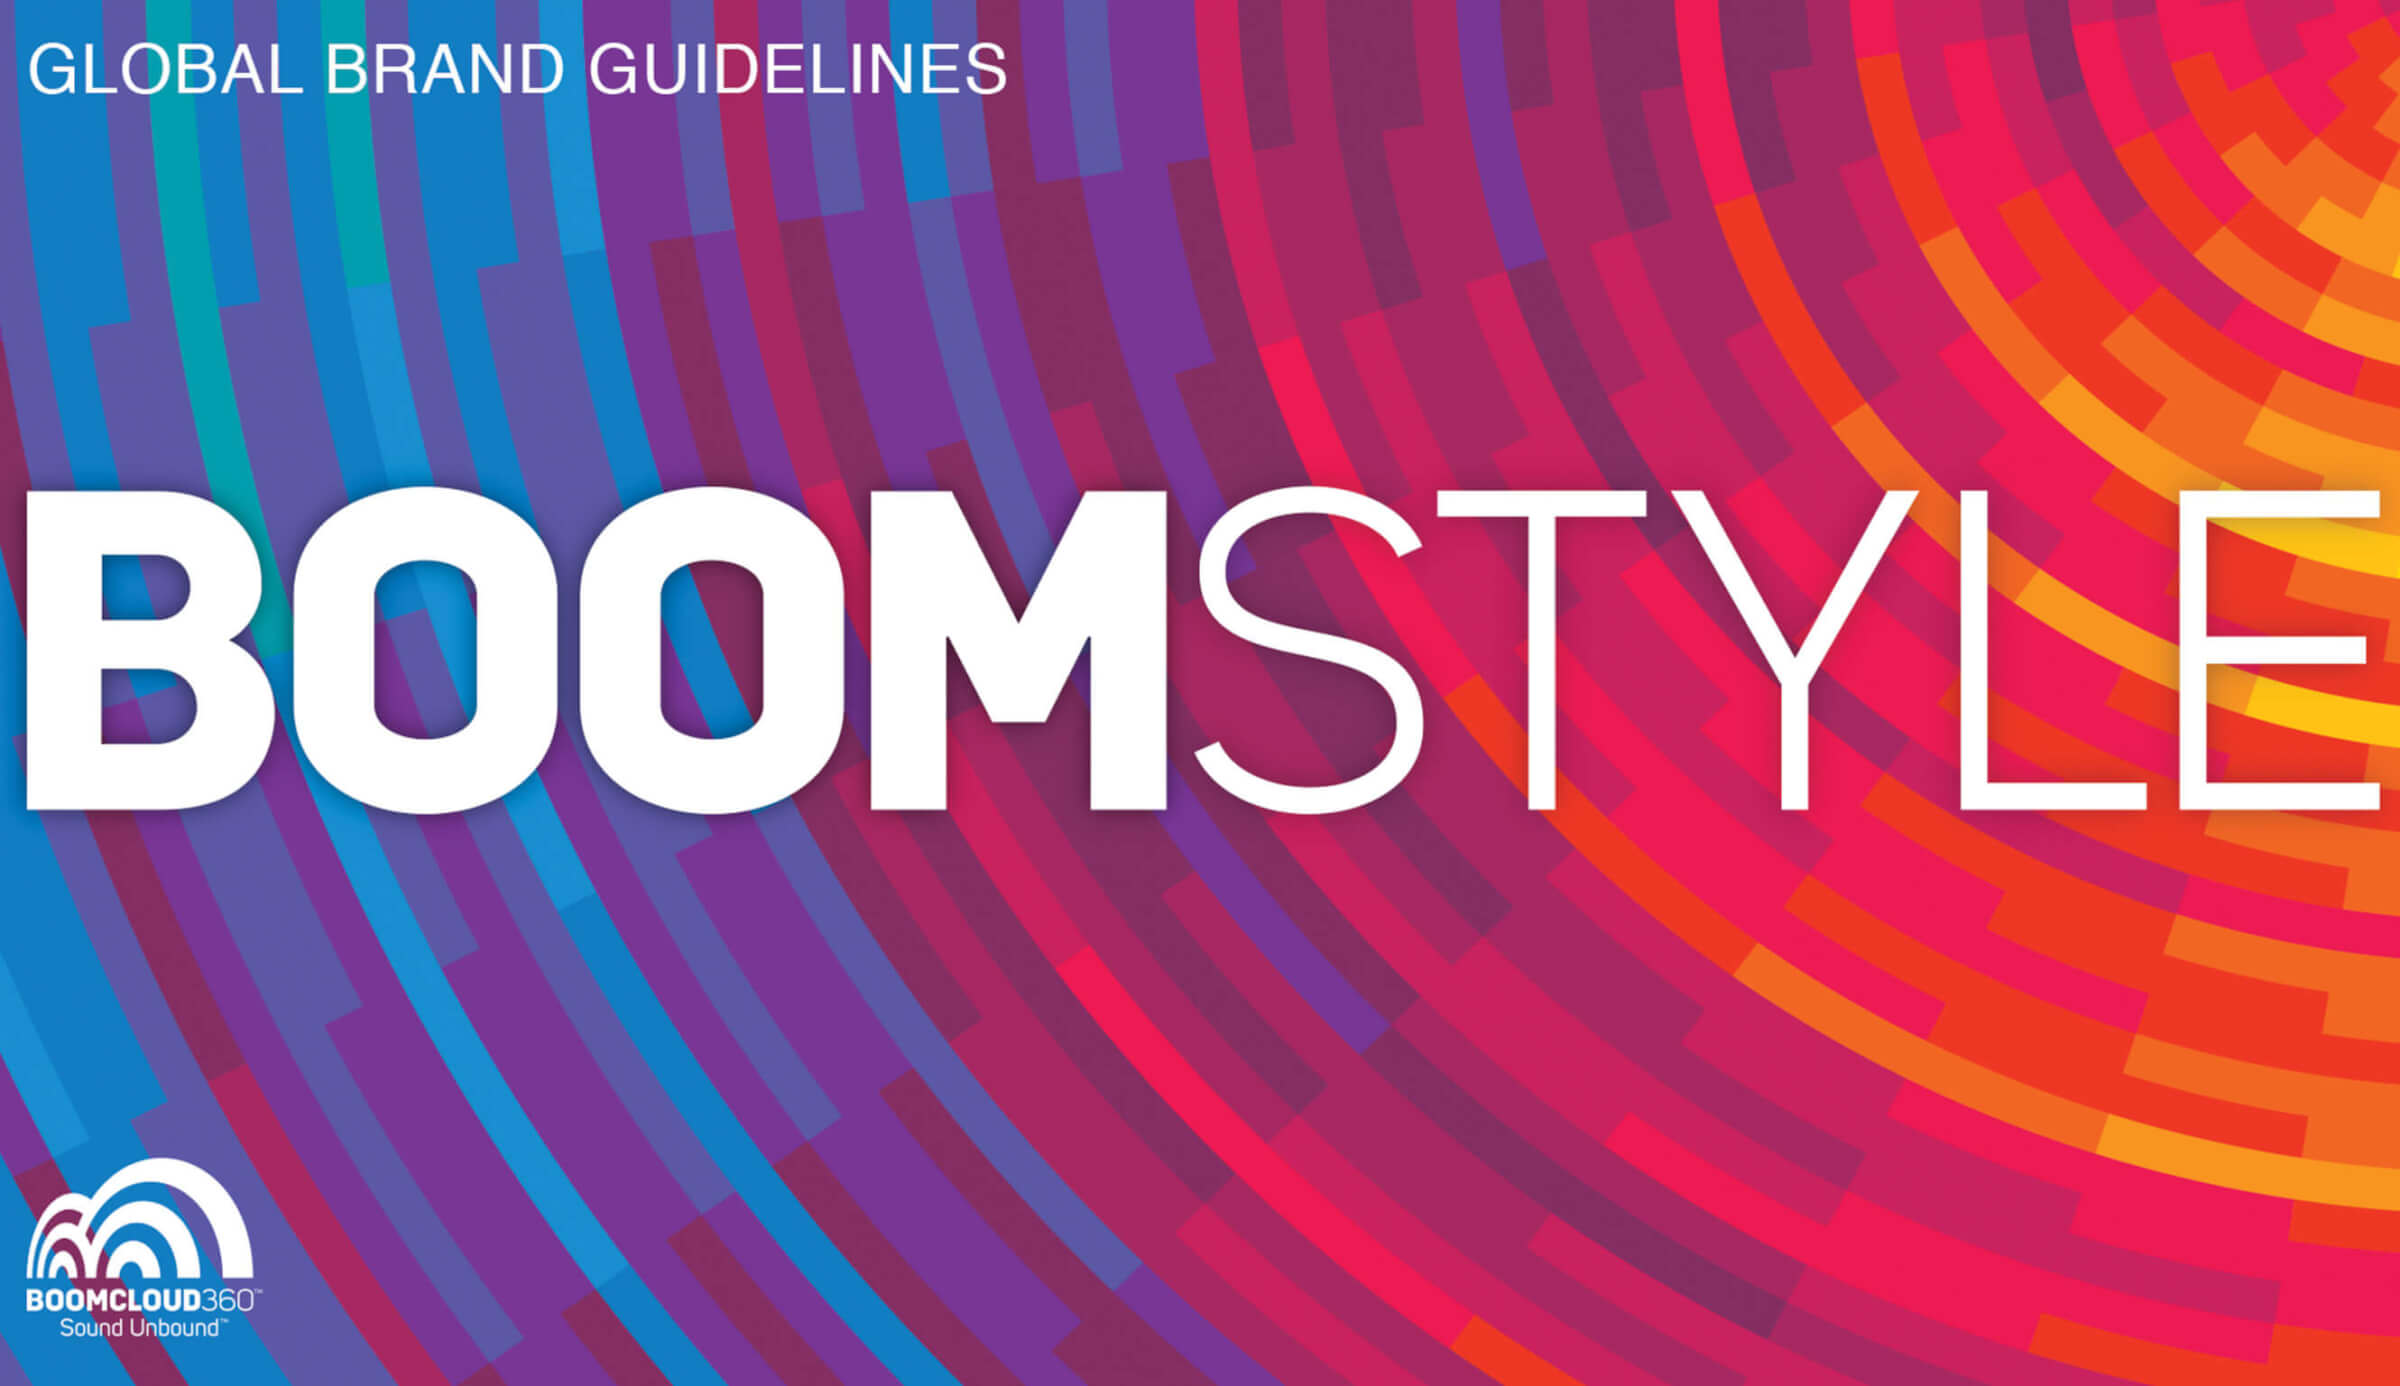 BoomCloud360 Global Brand Guidelines